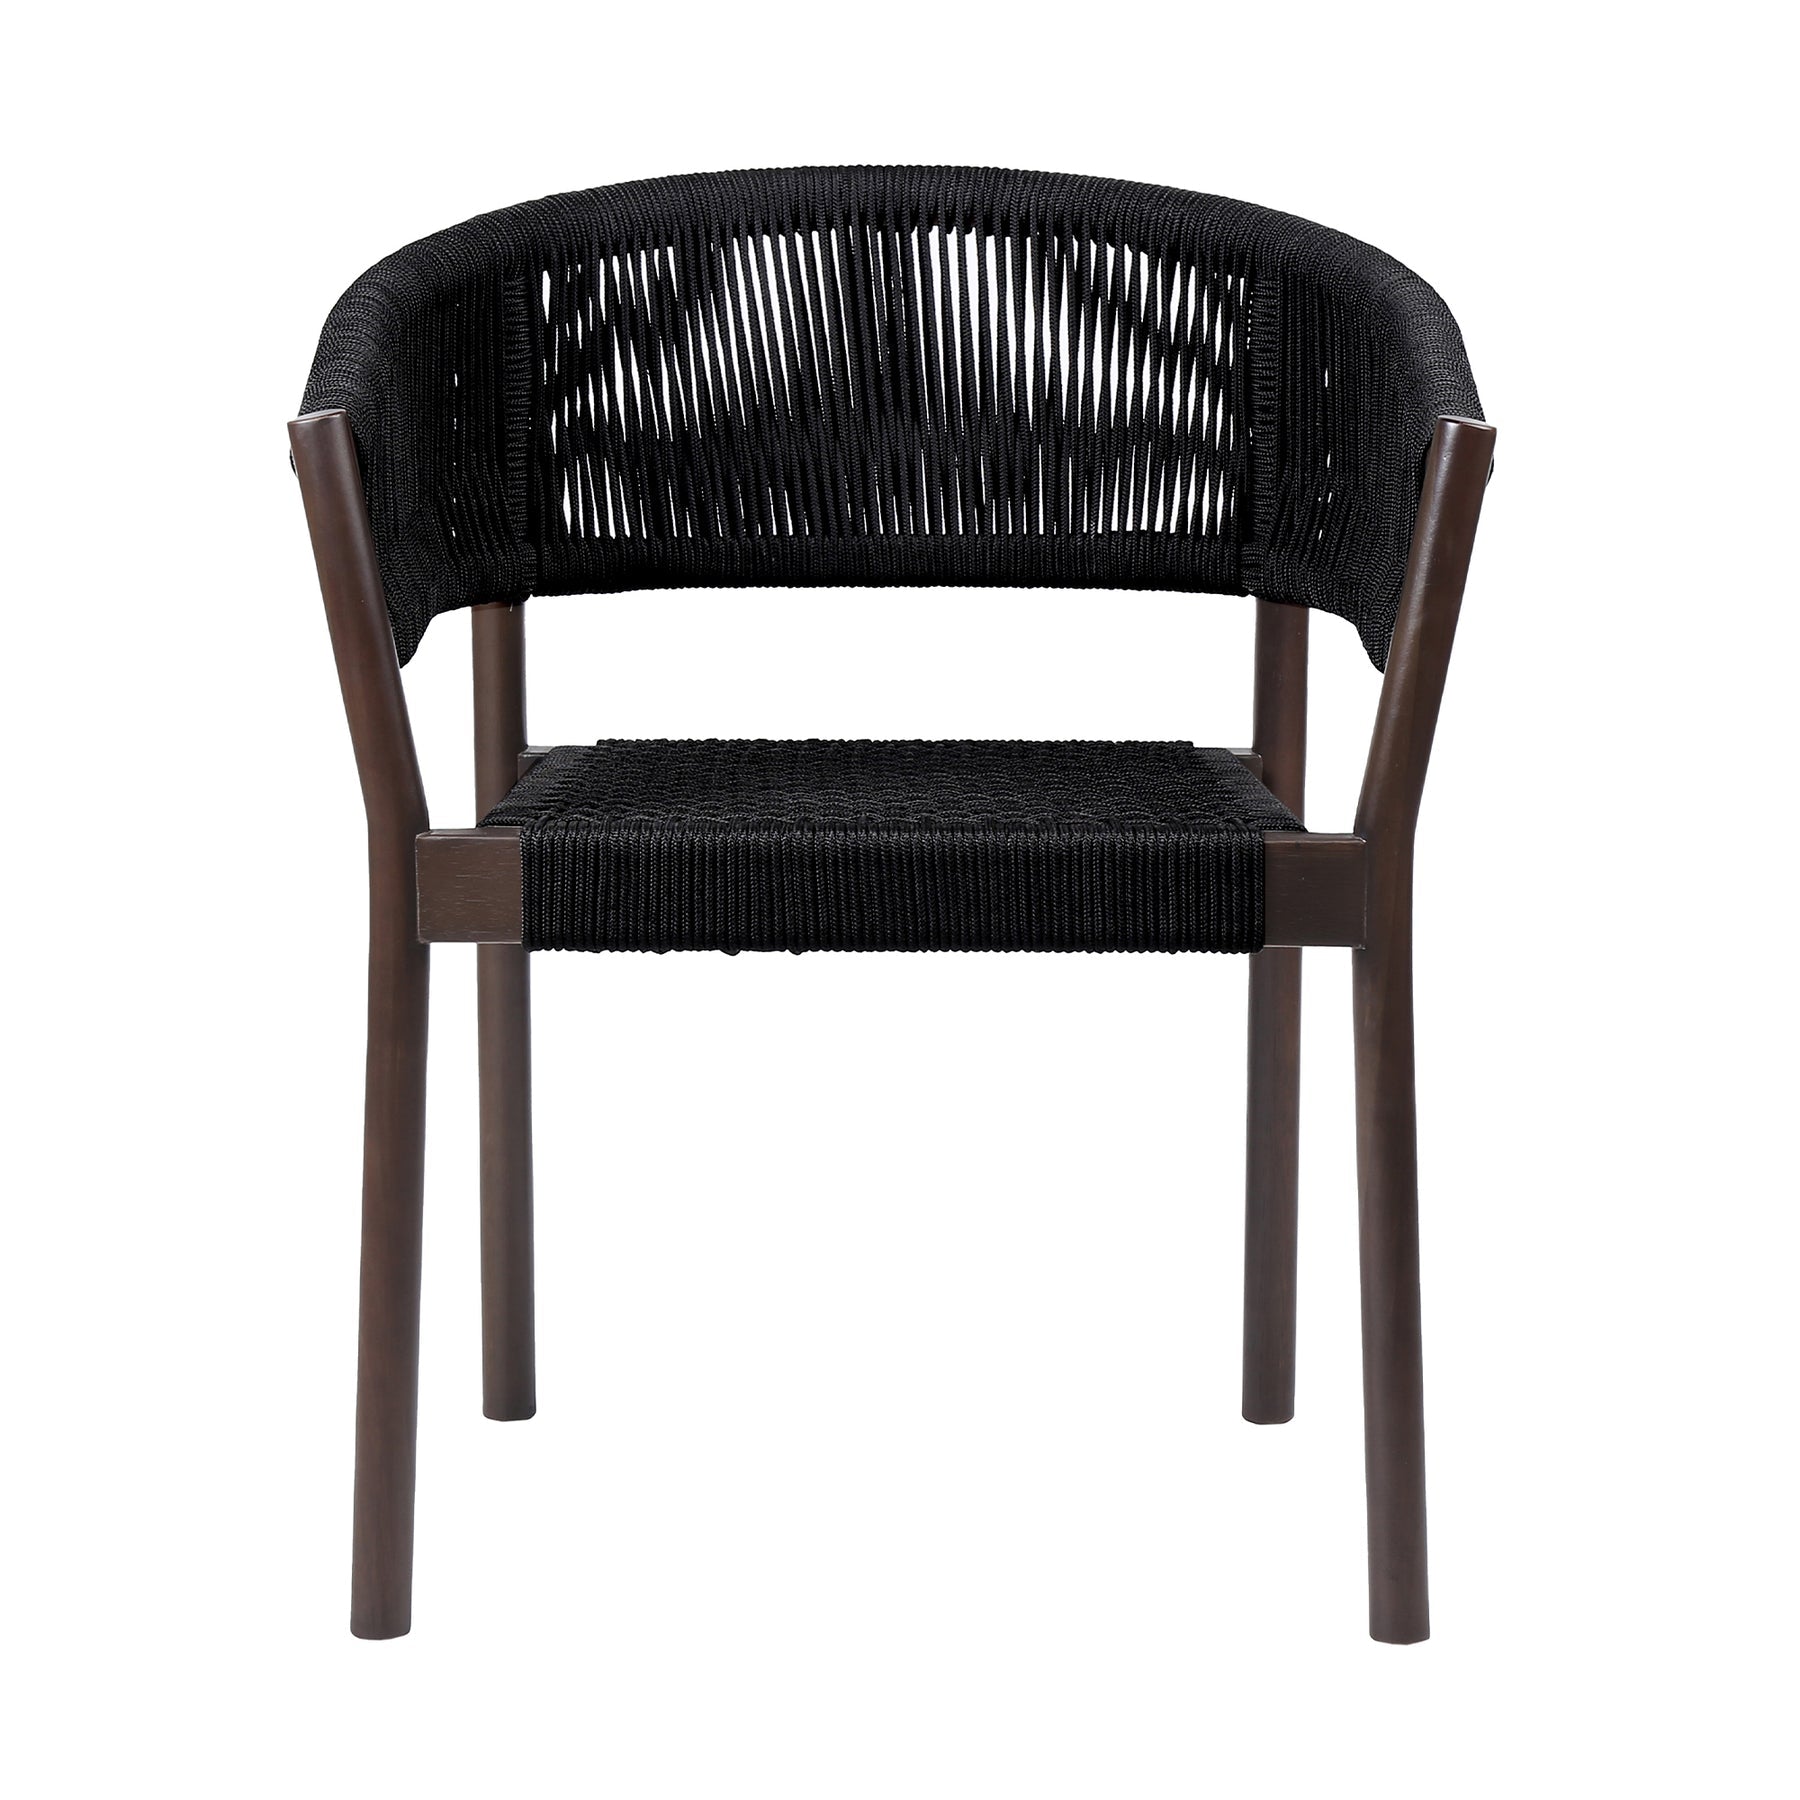 Doris outdoor dining chair set of 2, light/charcoal